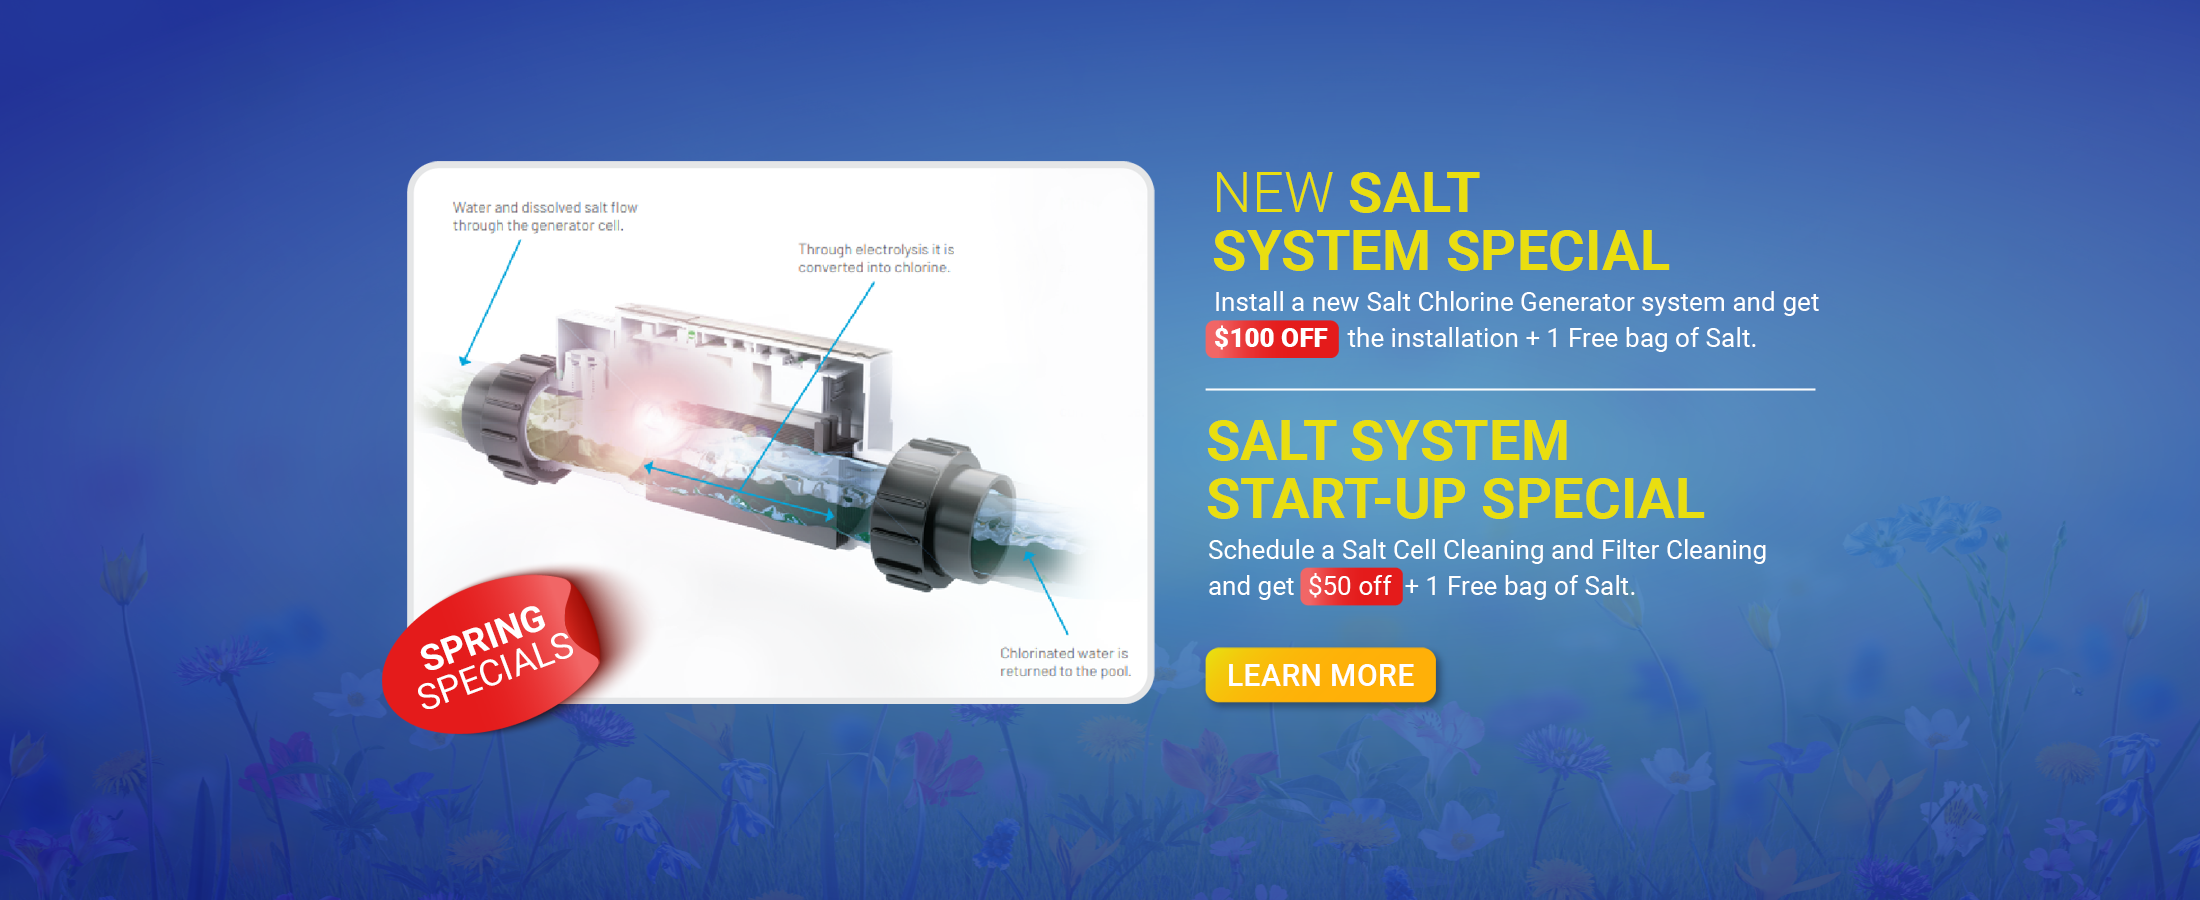 new Salt Chlorine Generator system offer